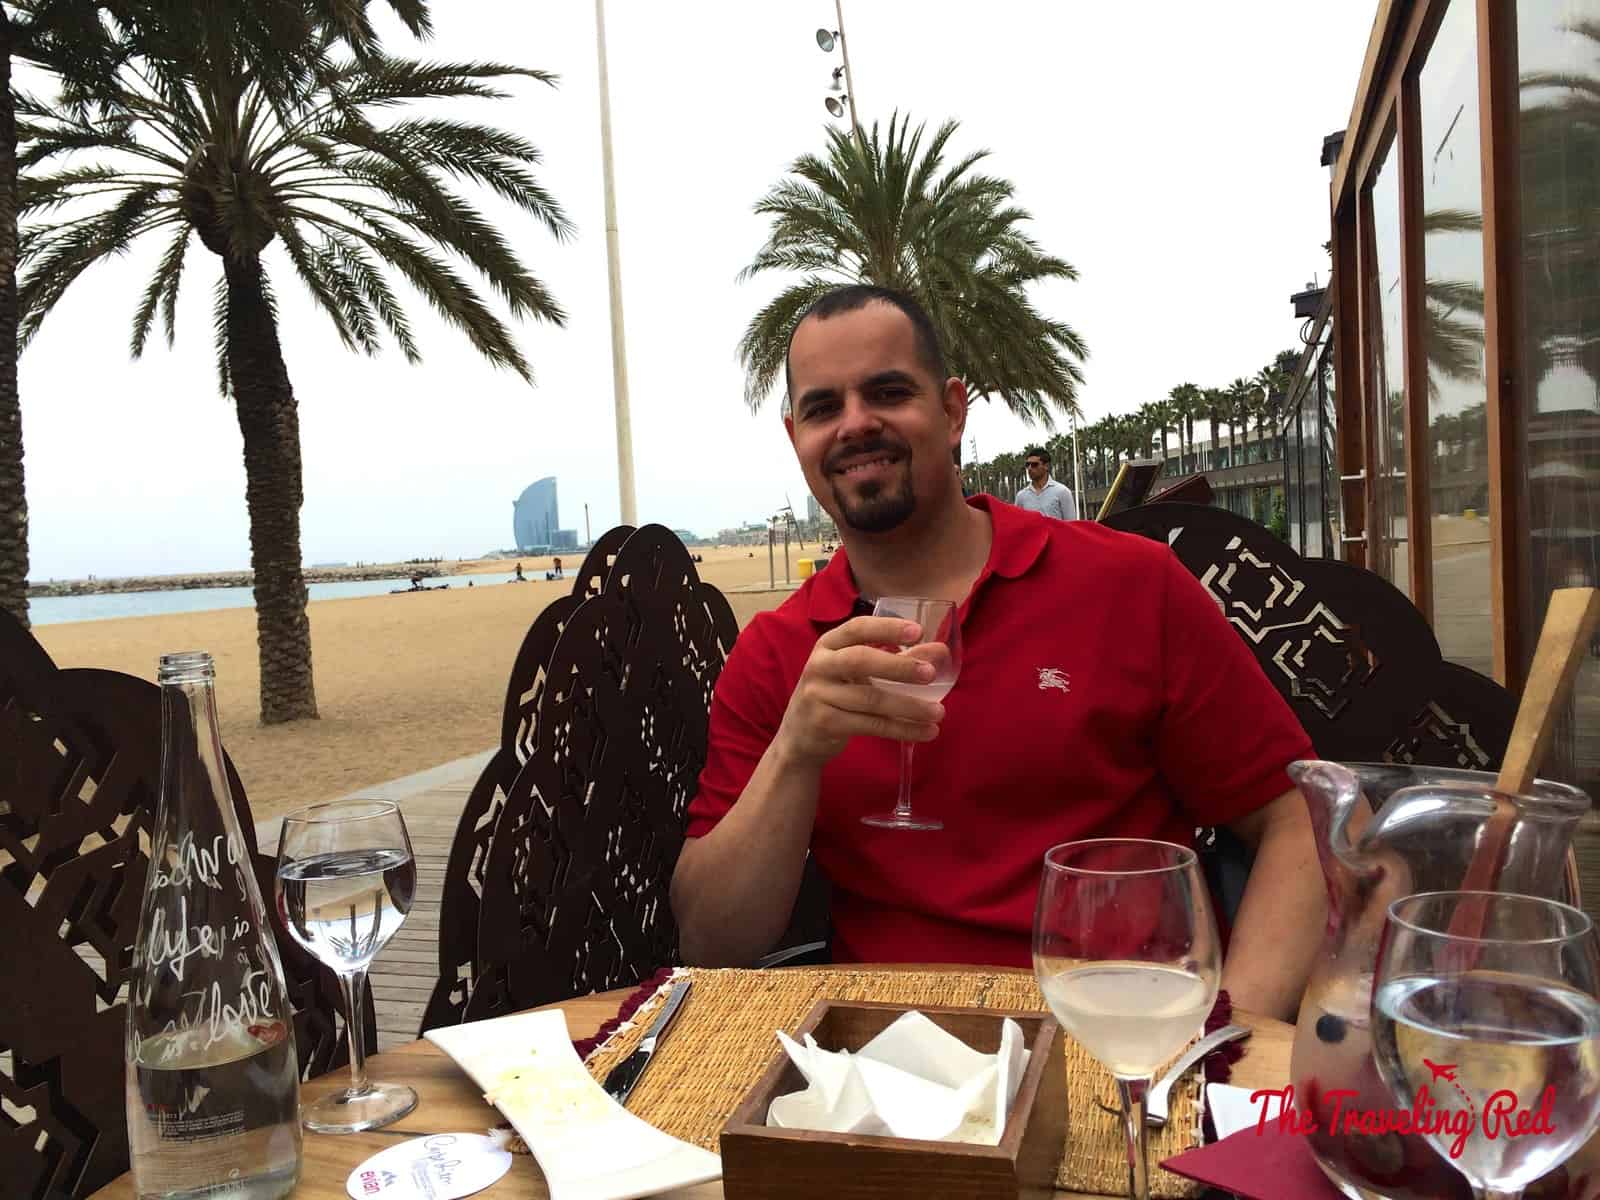 Lunch by the beach at CDLC (Carpe Diem Lounge Club) in the Barceloneta neighborhood of Barcelona, Spain. 